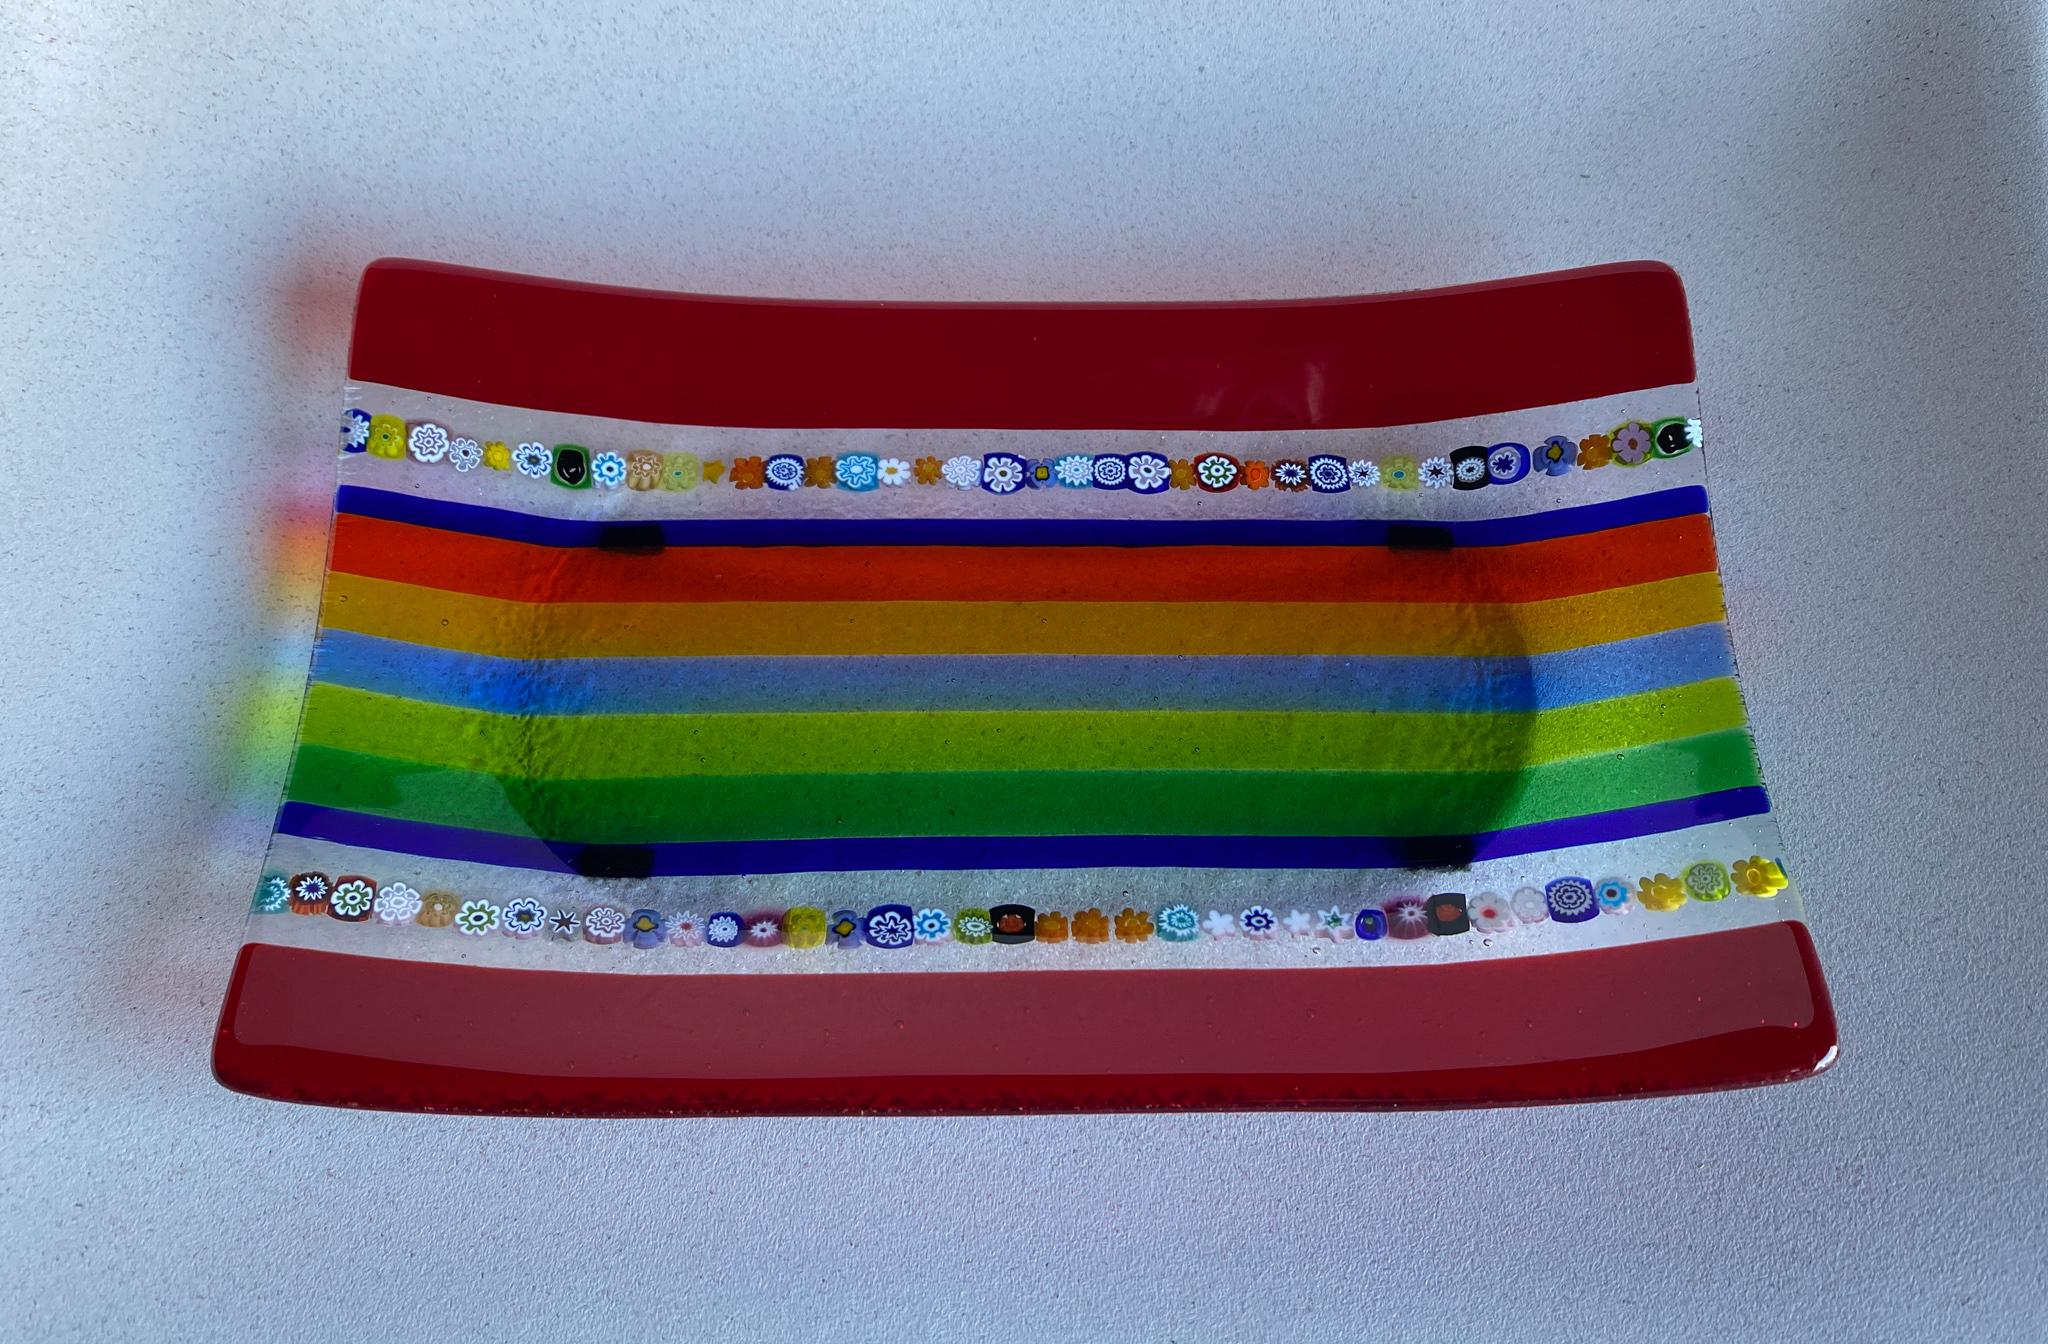 Italian Art Glass rainbow dish / tray, circa 1990.